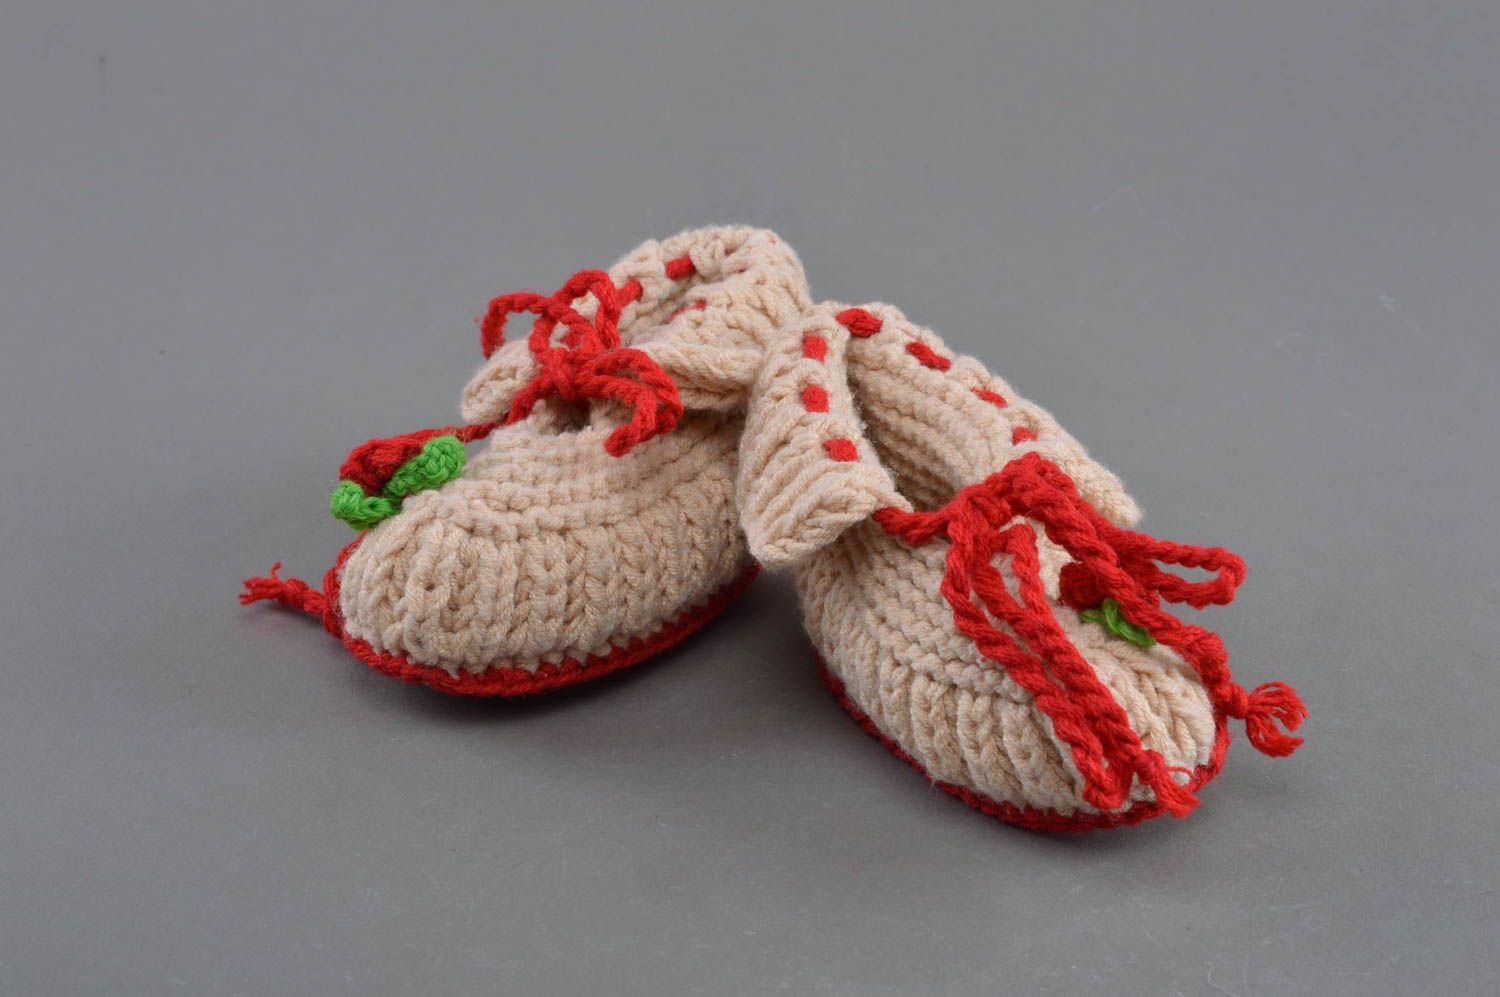 Warm knitted baby booties handmade woolen socks for little children photo 1